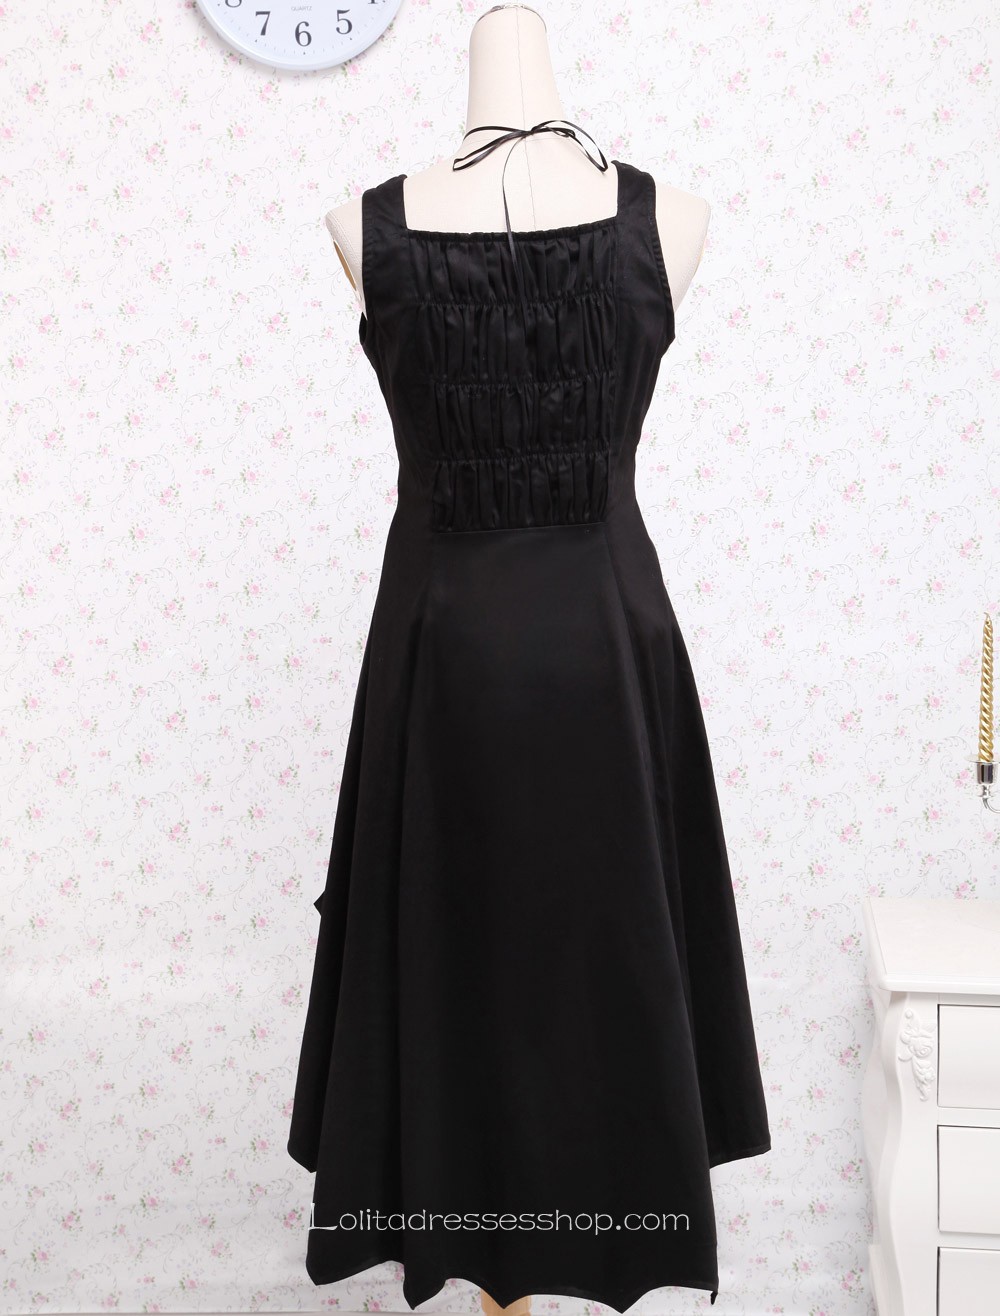 Black Cotton Square Neck Ruffled Gothic Lolita Dress